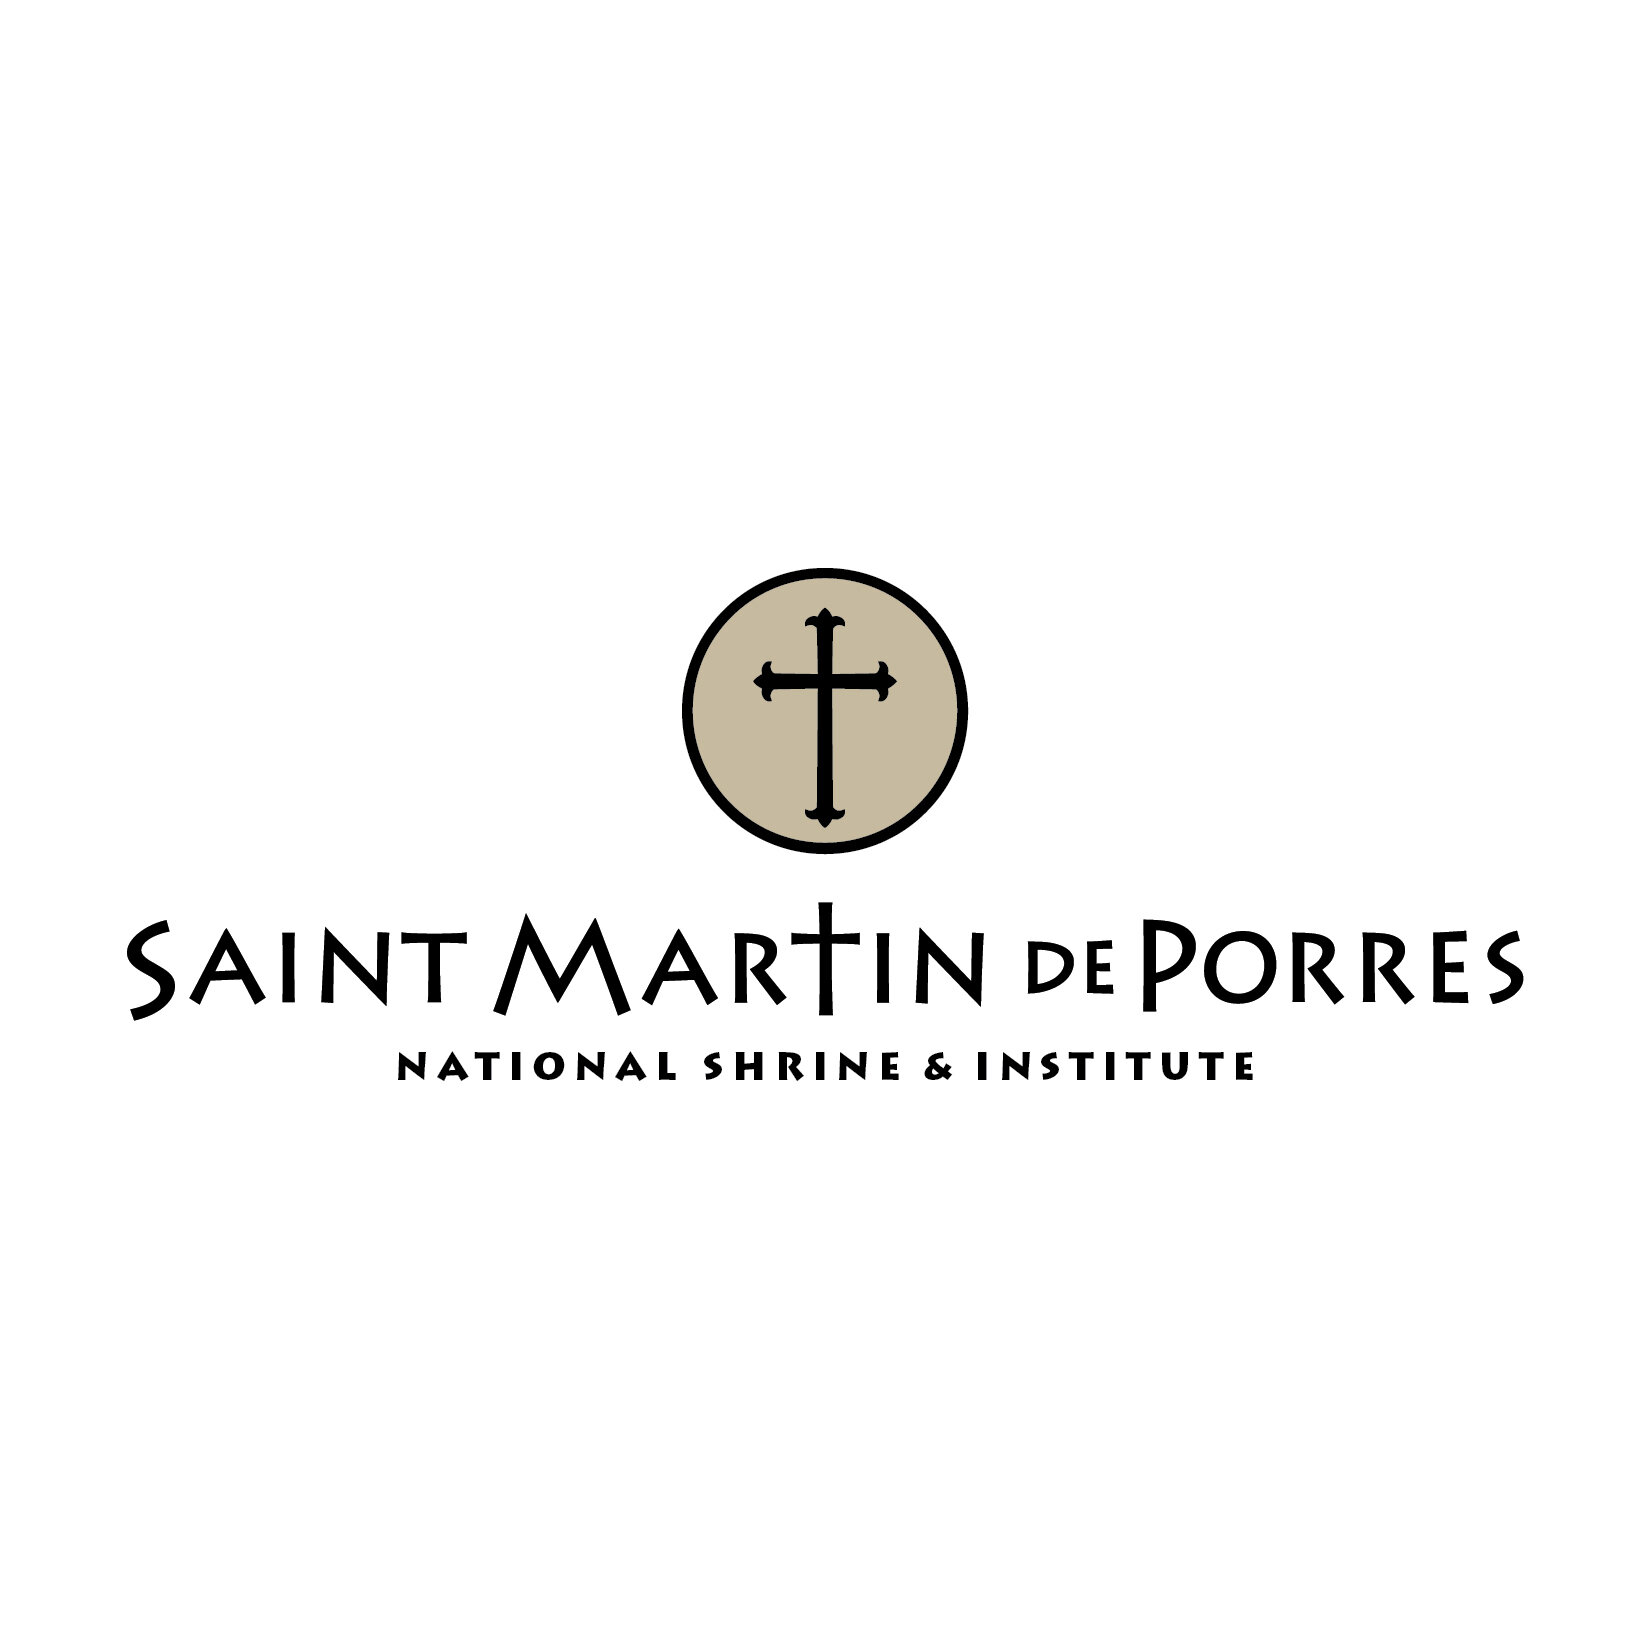  Branding creative and logo design by Chuck Mitchell  Pro bono work developed for St. Martin de Porres National Shrine &amp; Institute, Memphis 